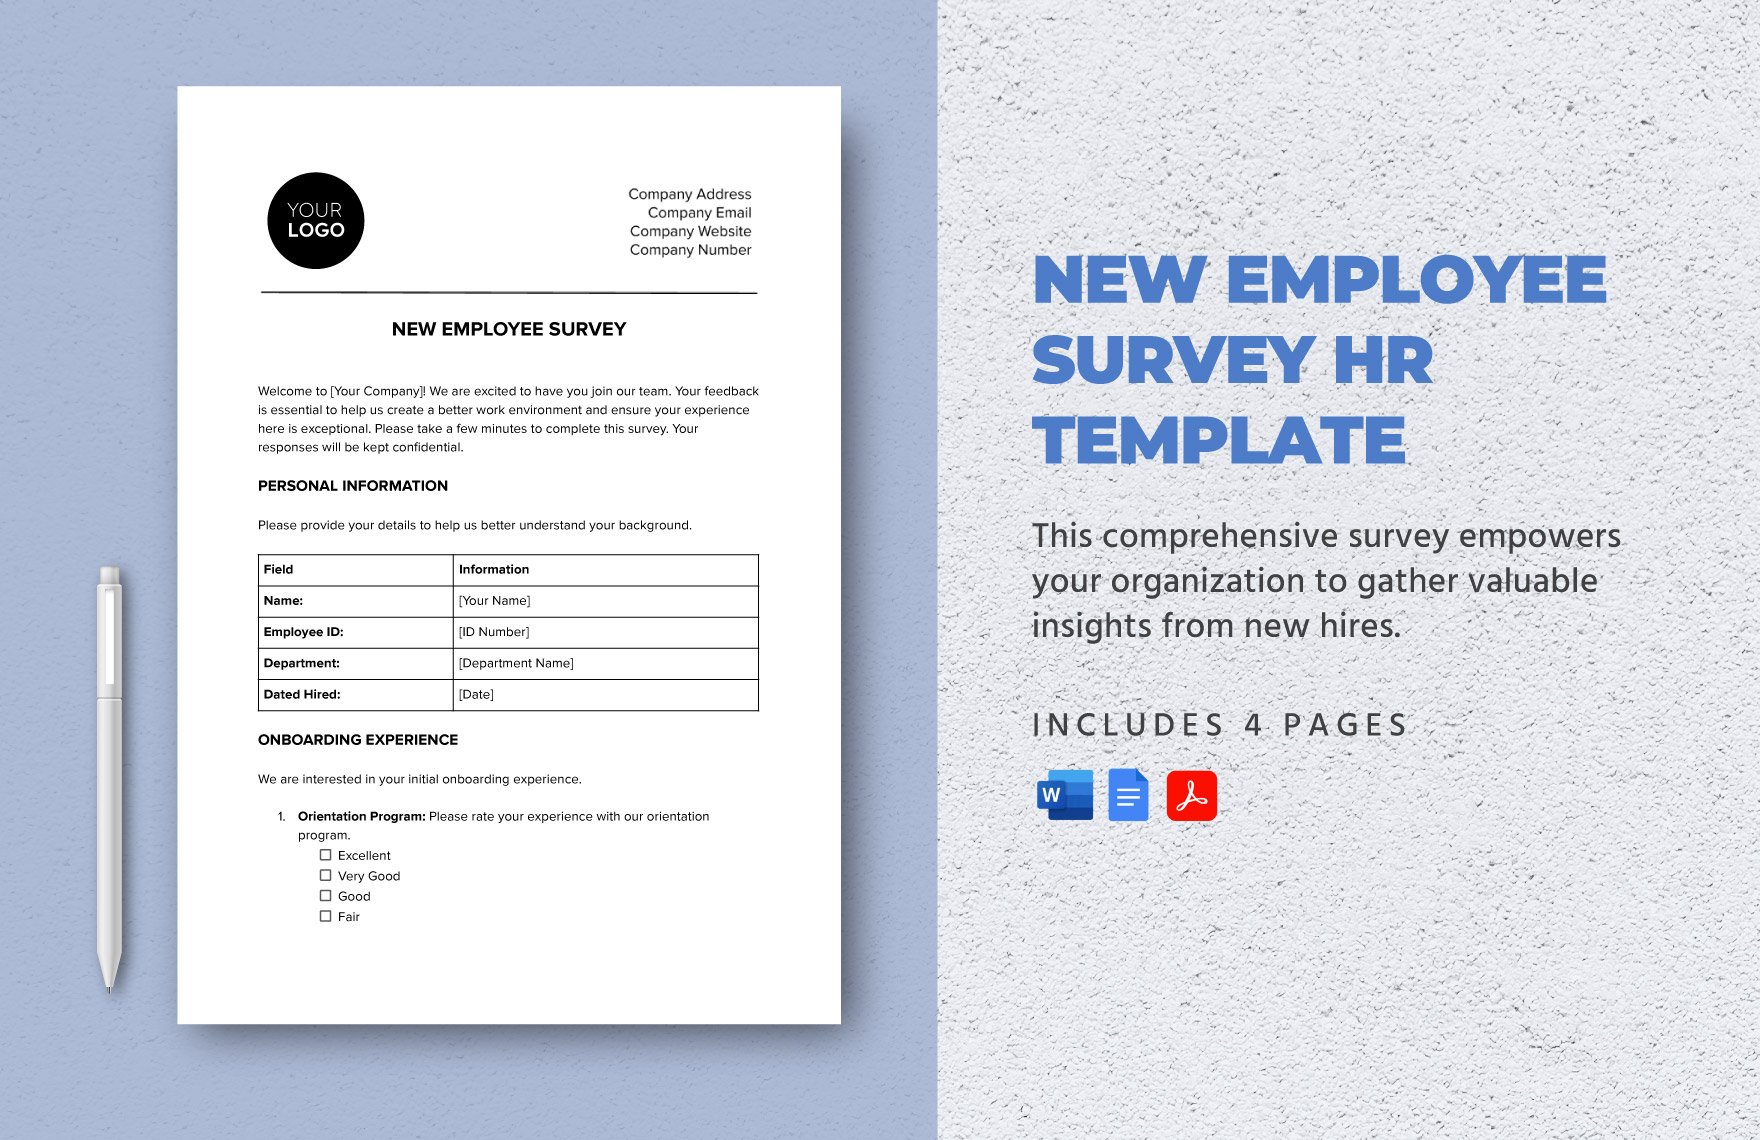 New Employee Survey HR Template